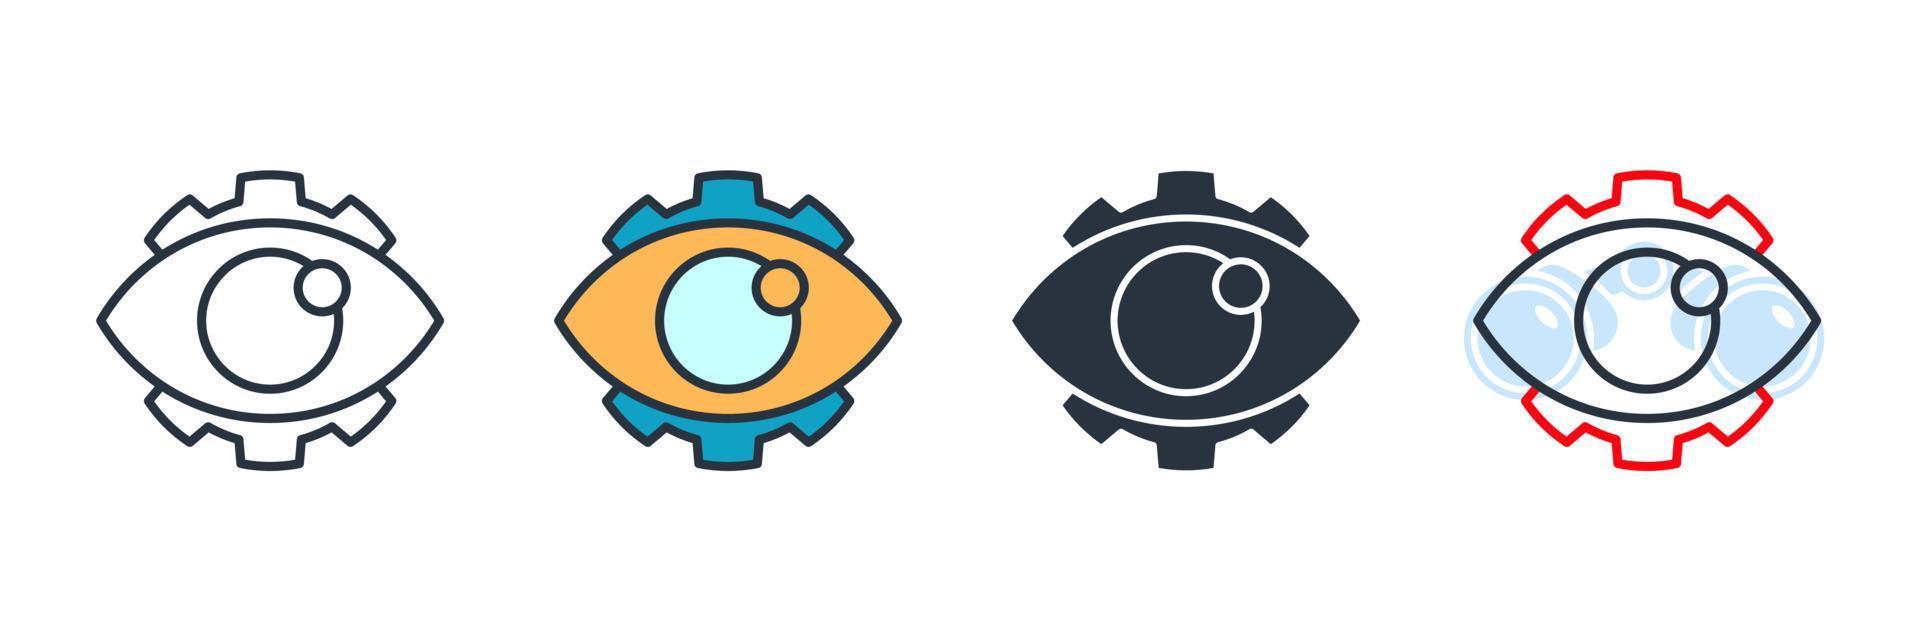 Vision-Symbol-Logo-Vektor-Illustration. Augenzahnrad-Symbolvorlage für Grafik- und Webdesign-Sammlung vektor